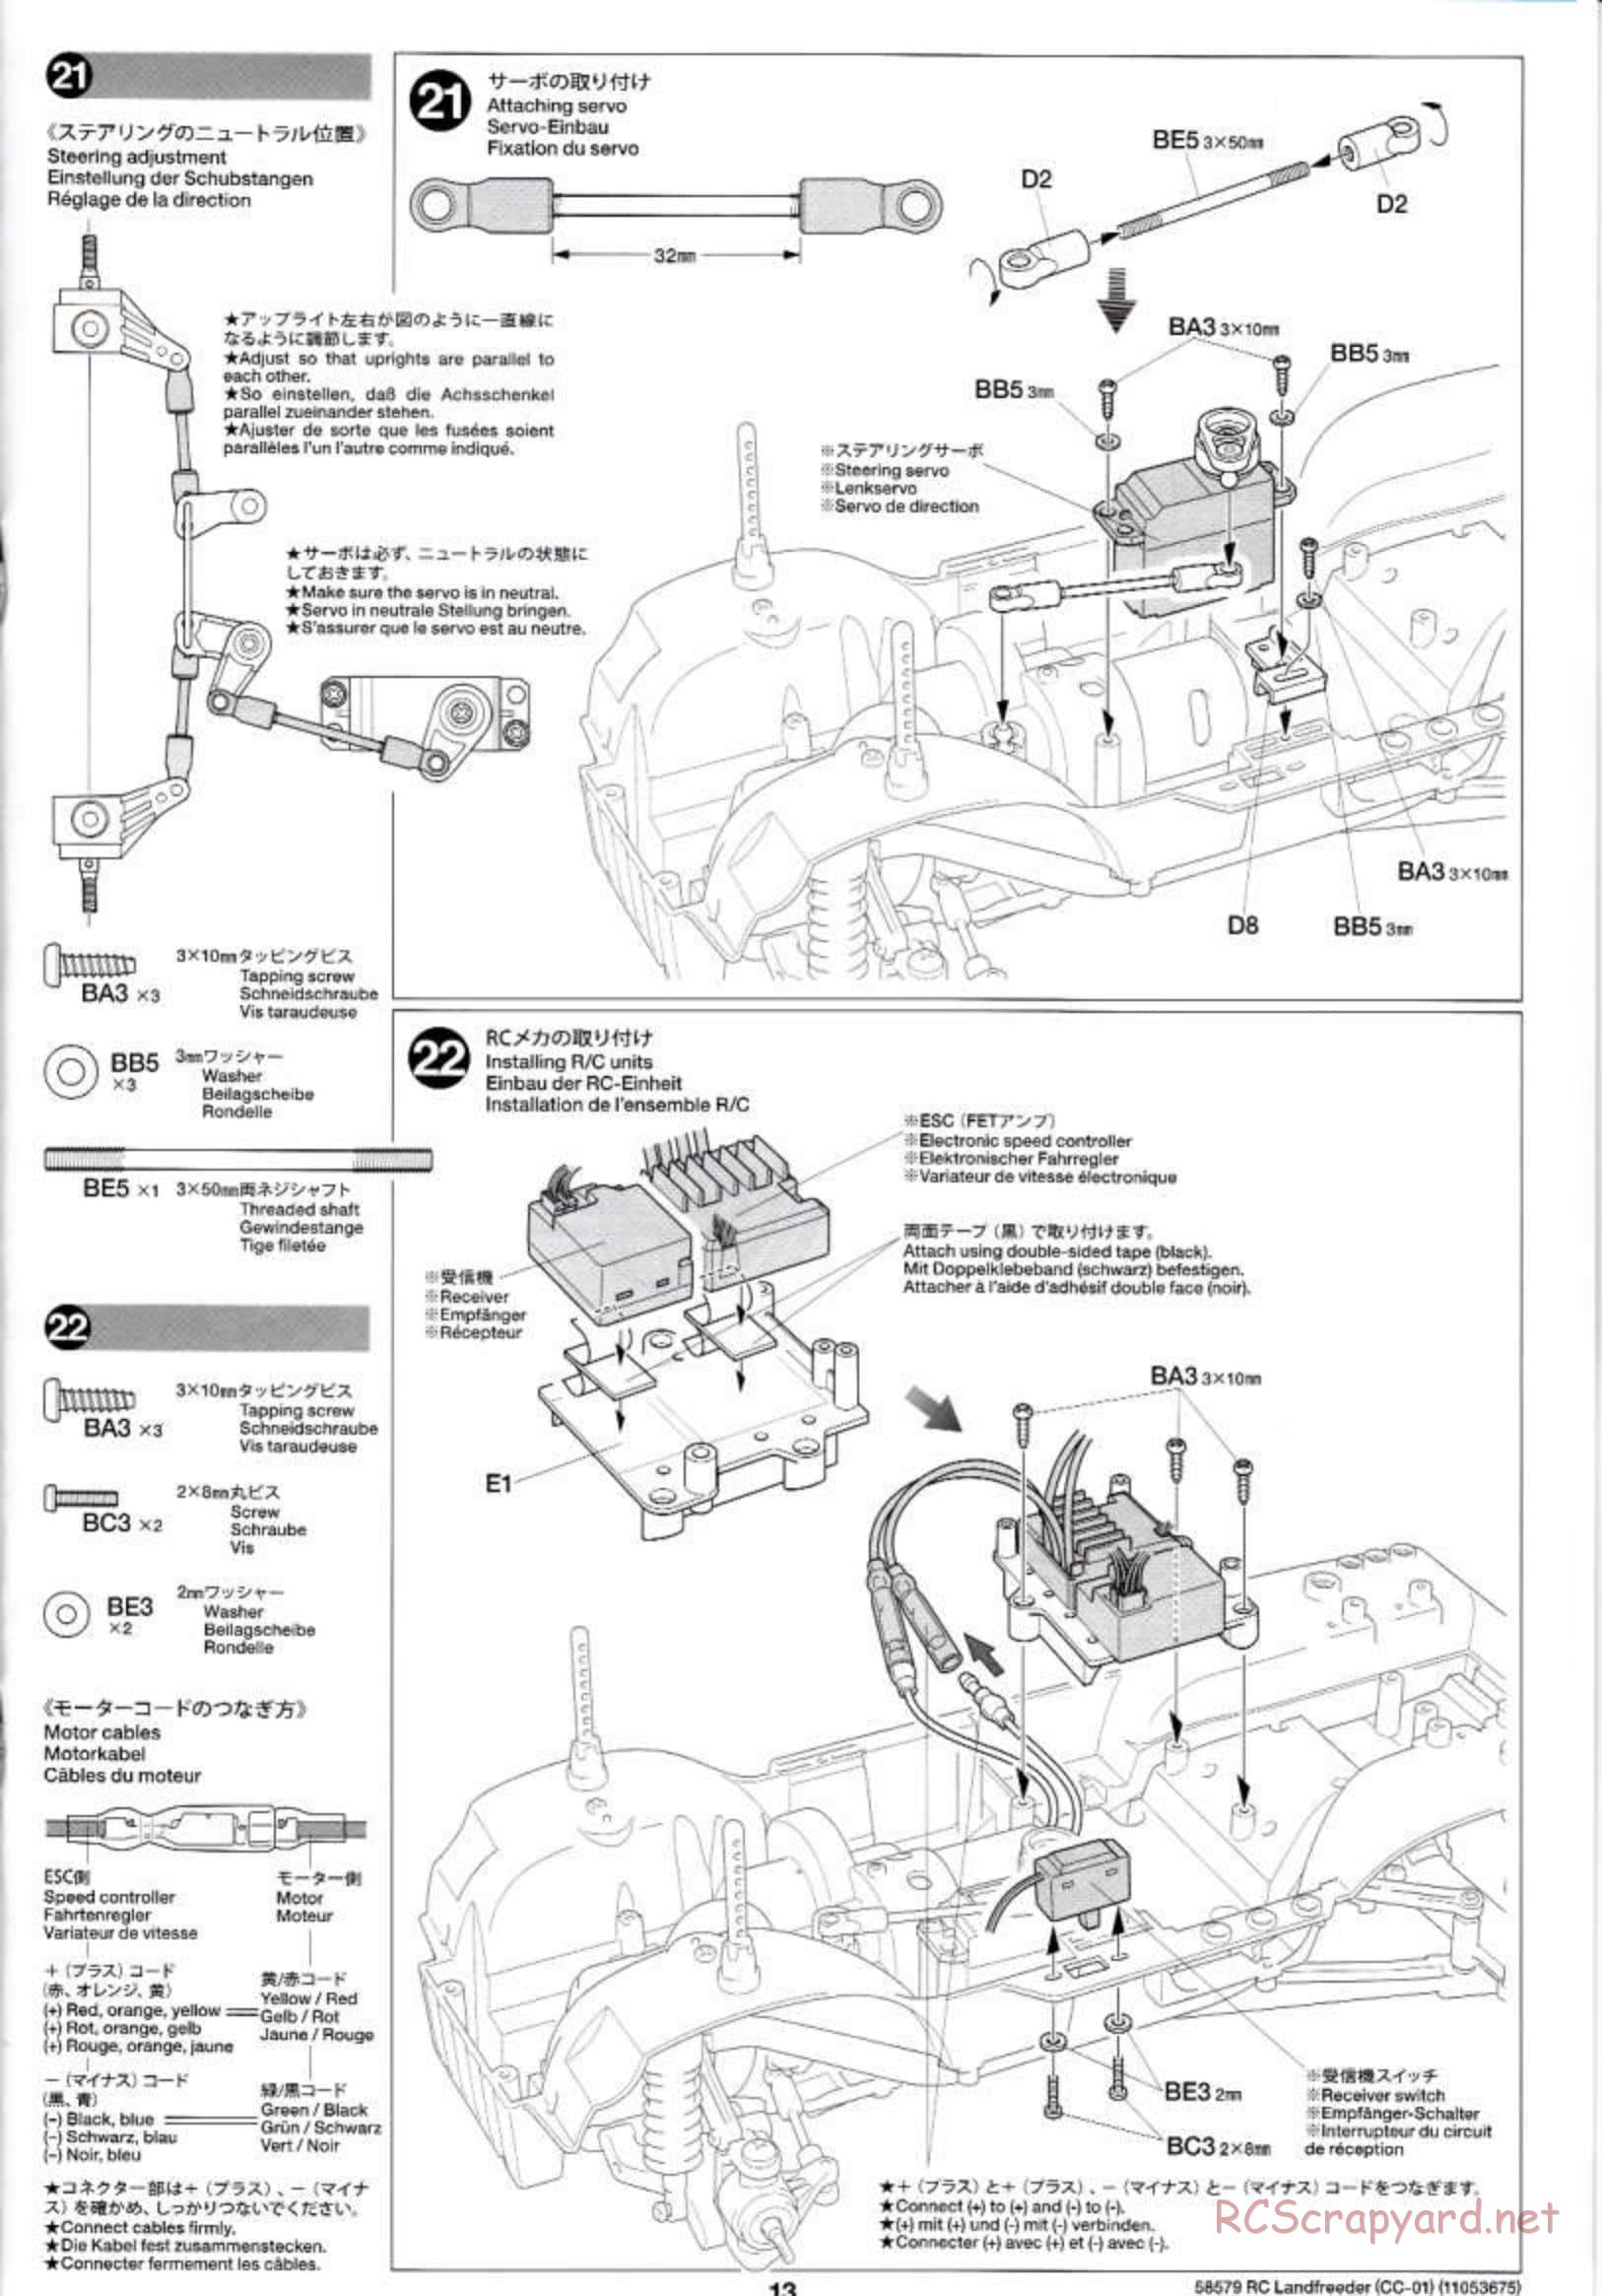 Tamiya - LandFreeder - CC-01 Chassis - Manual - Page 13